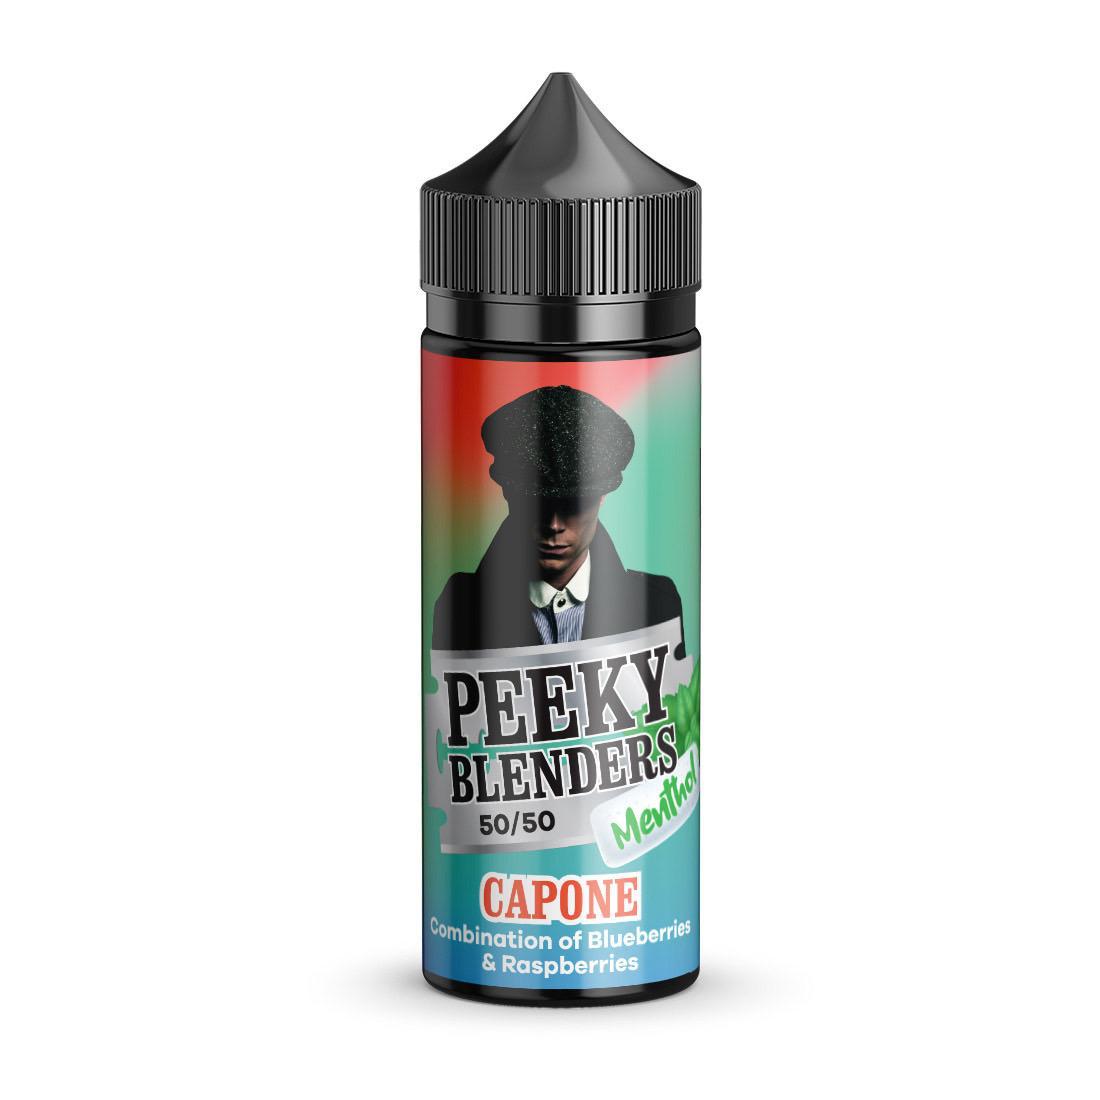 Capone (Blueberries & Raspberries) 100ml E-Liquid by Peeky Blenders